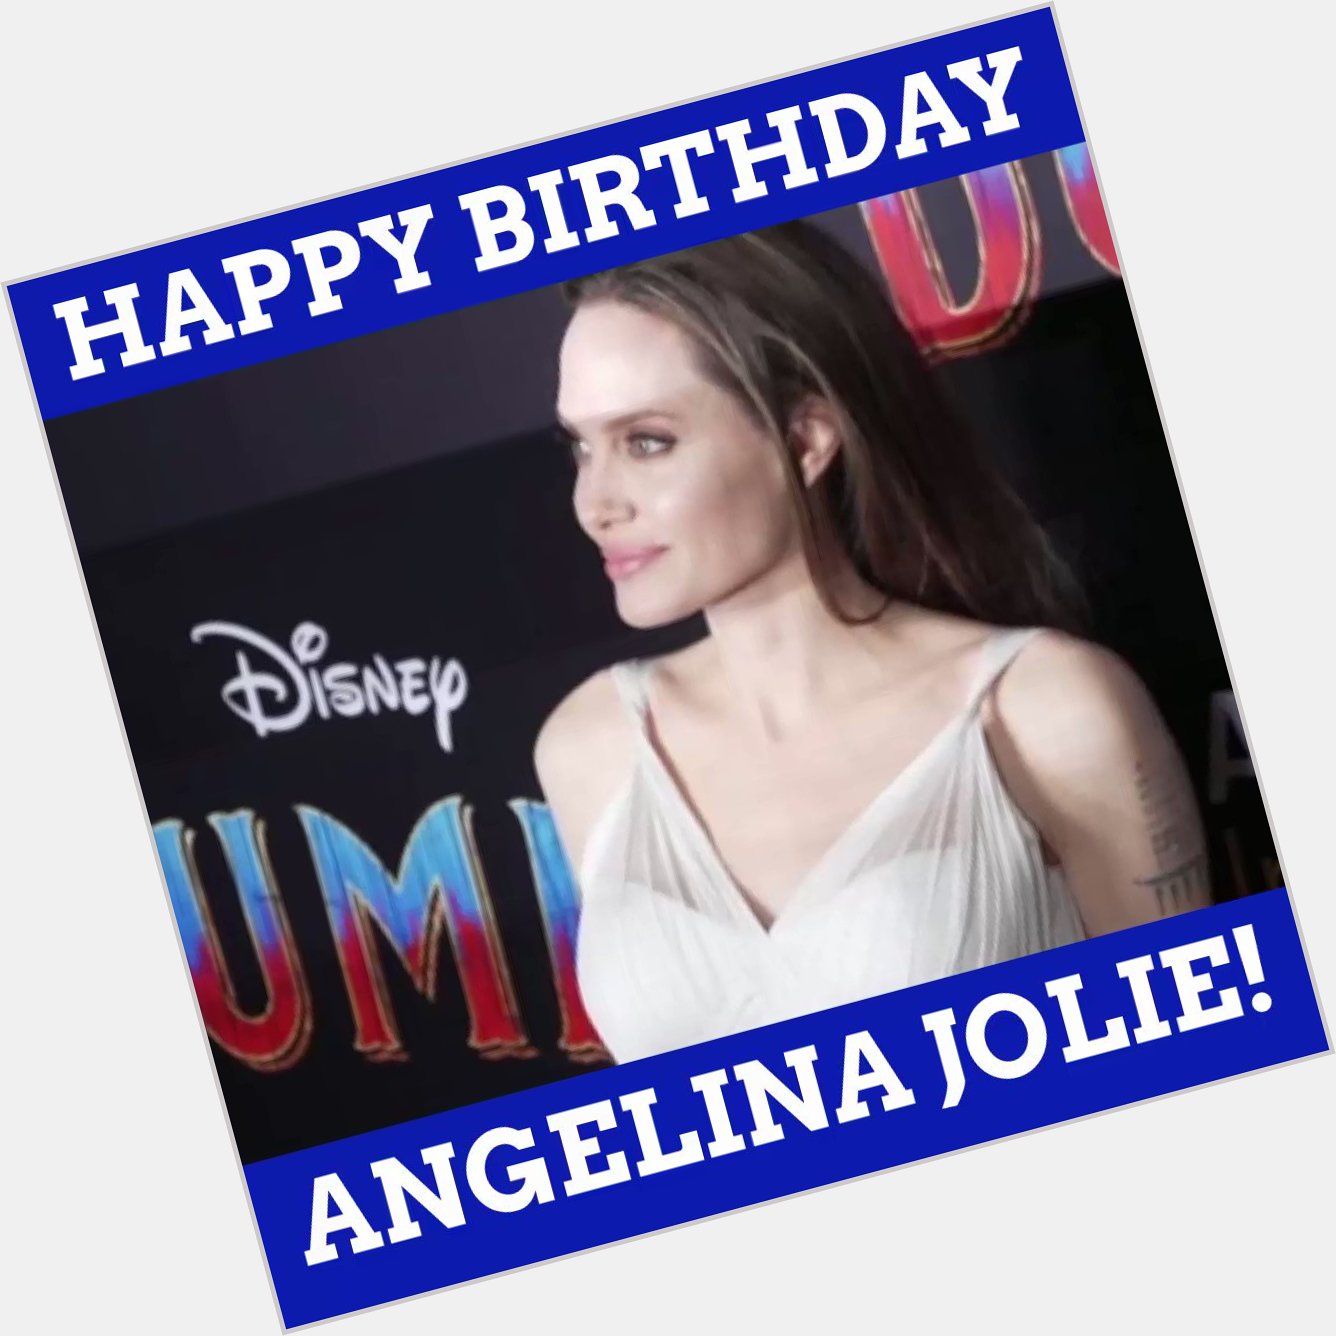 Happy birthday, Angelina Jolie!  